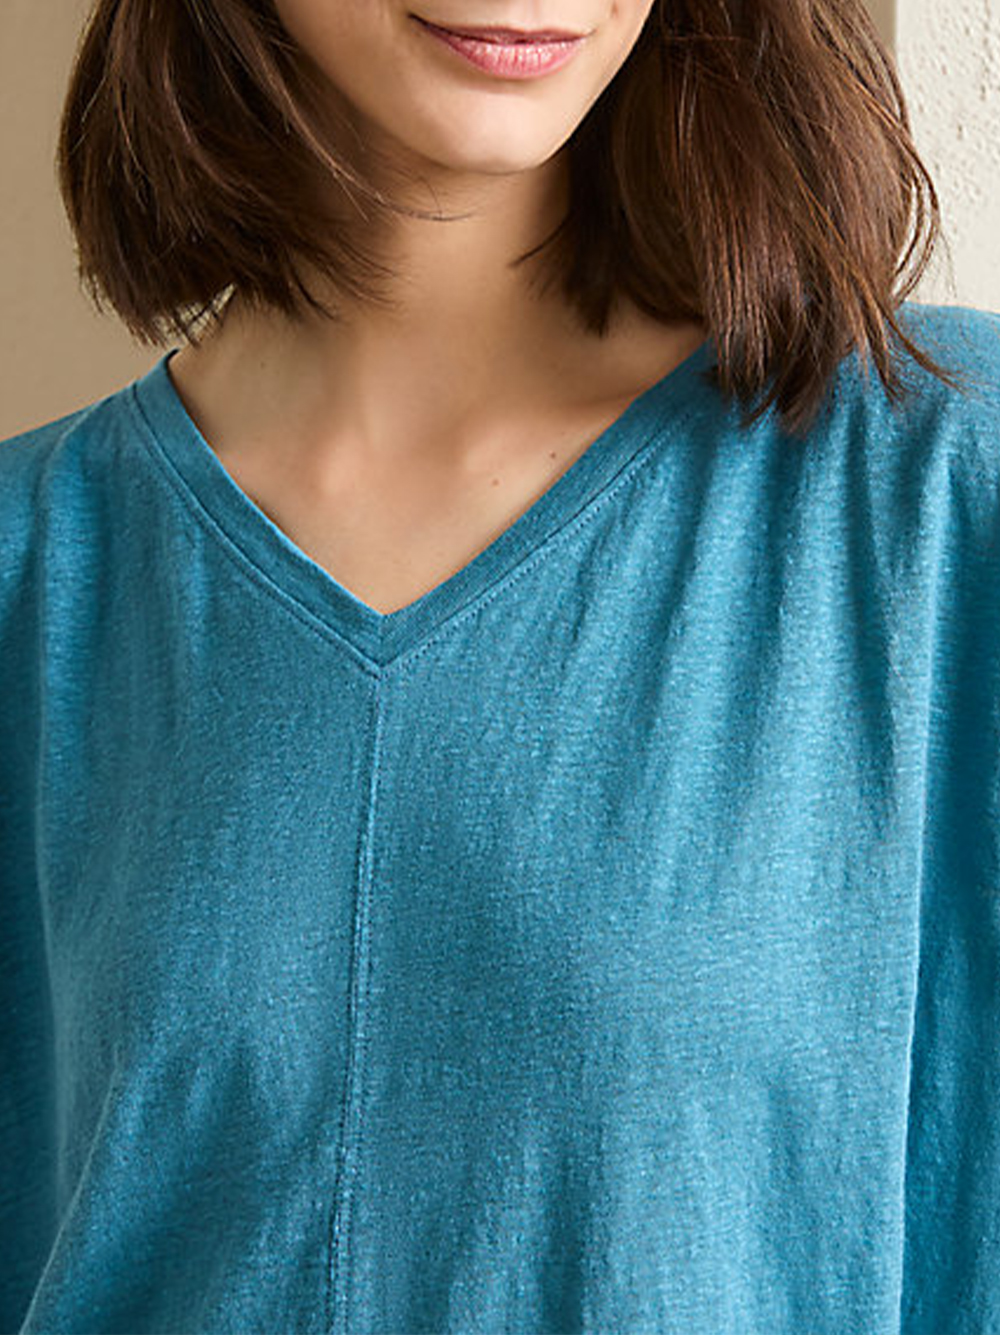 COZINEN Women's Solid Color V-Neck Short Sleeve Top